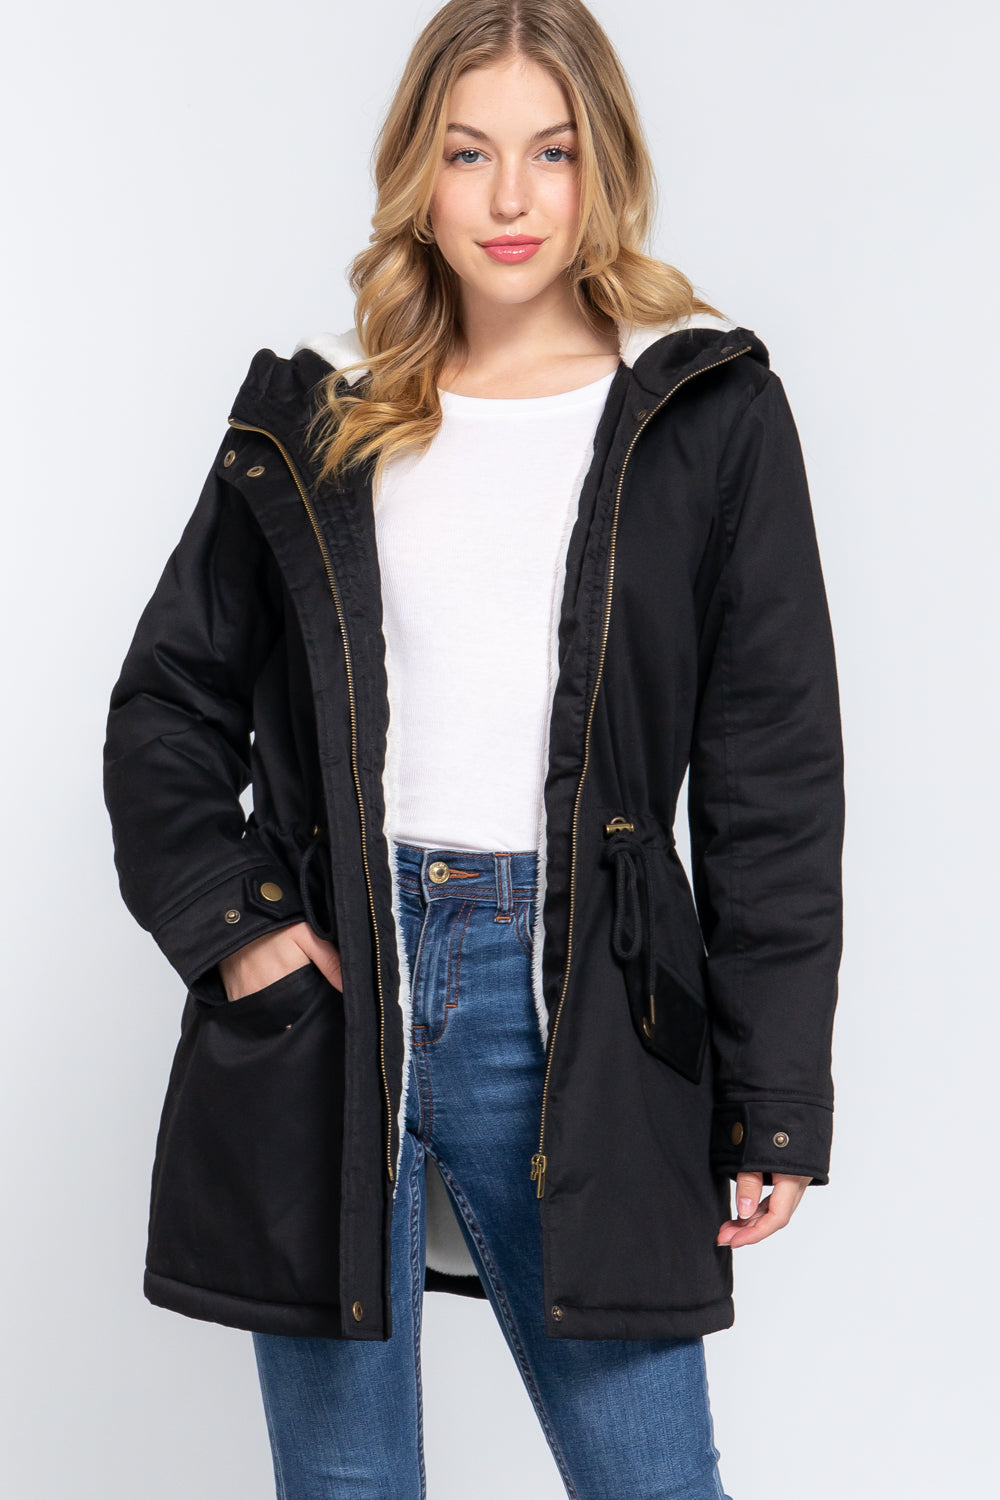 Black S - Fleece Lined Fur Hoodie Utility Jacket - 4 colors - womens jacket at TFC&H Co.